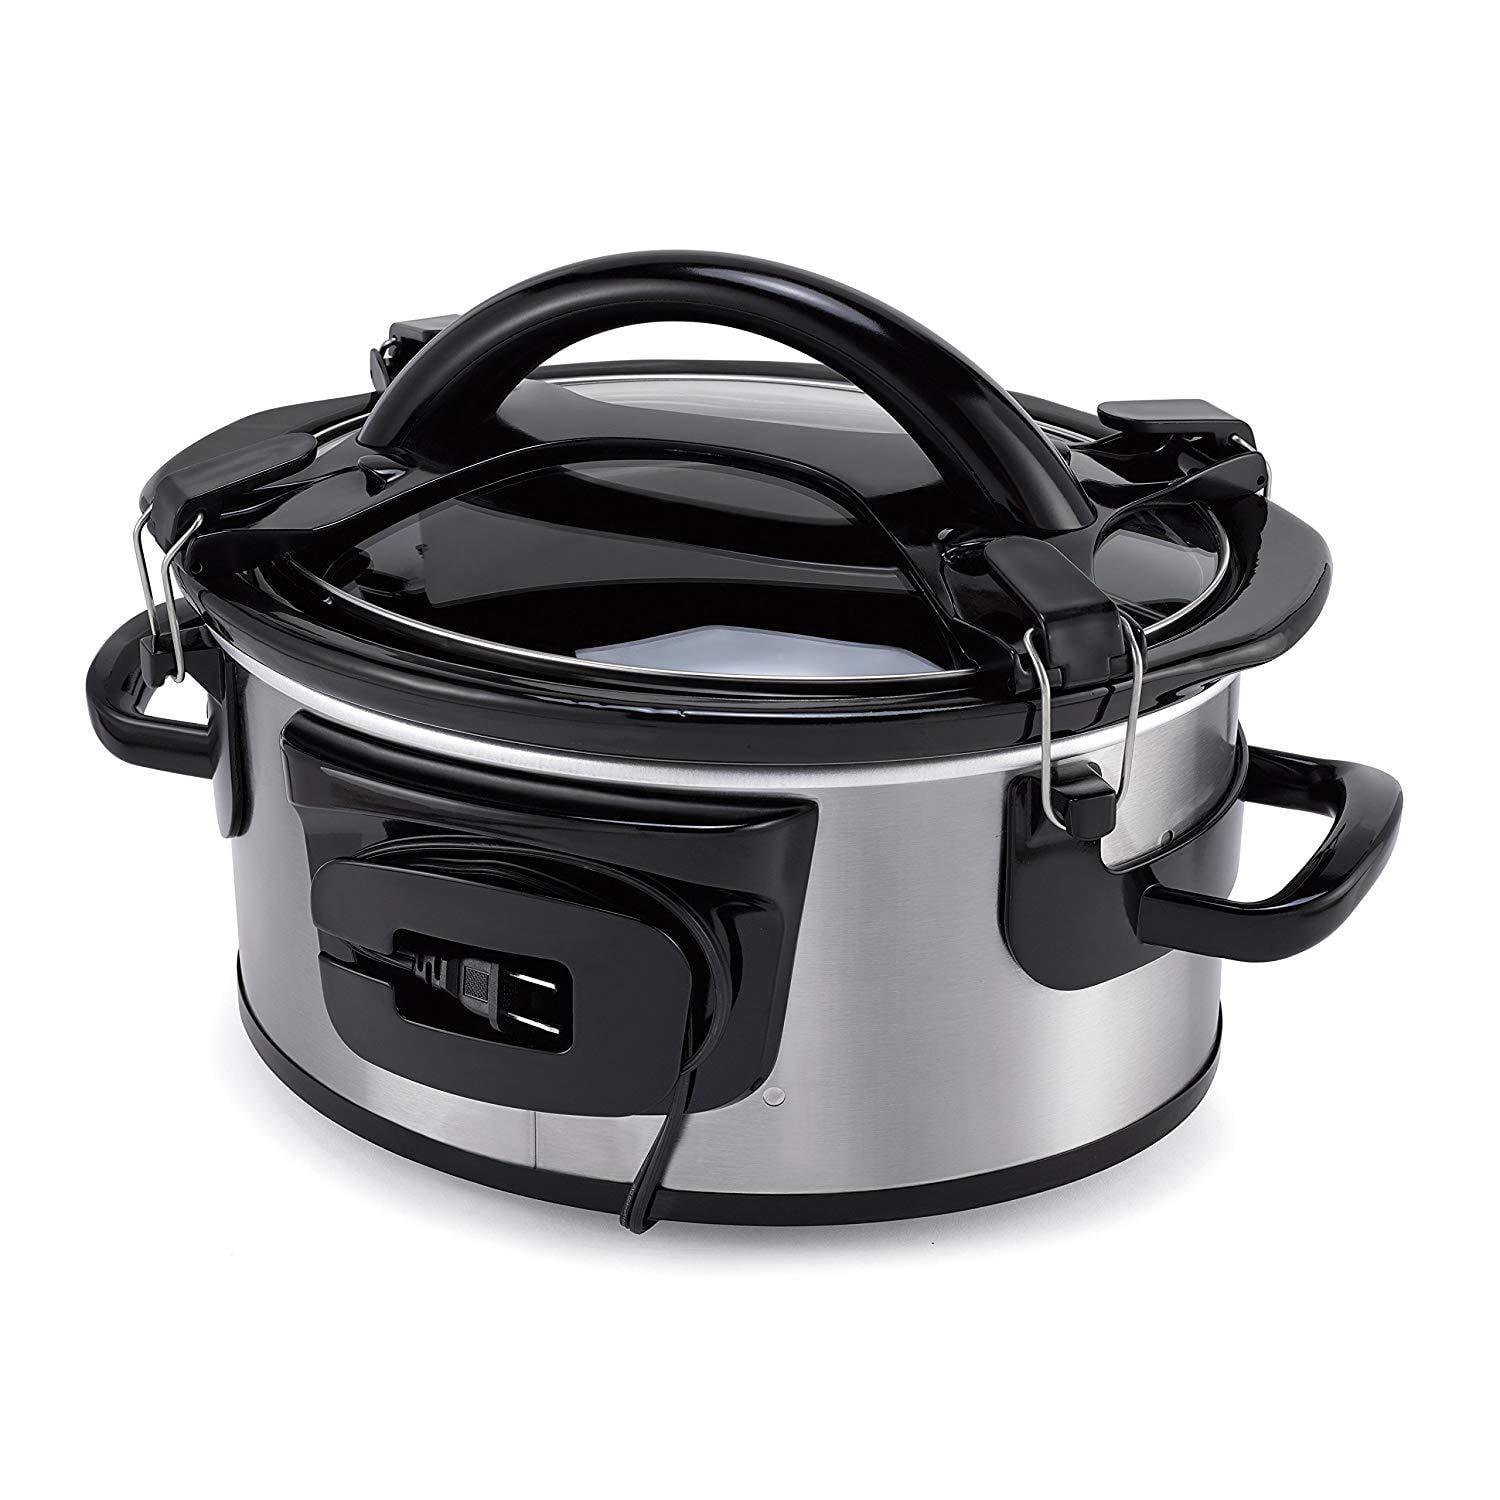 Crock-pot SCVPE600 Stoneware Slow Cooker, Smart-pot 6 Quart 